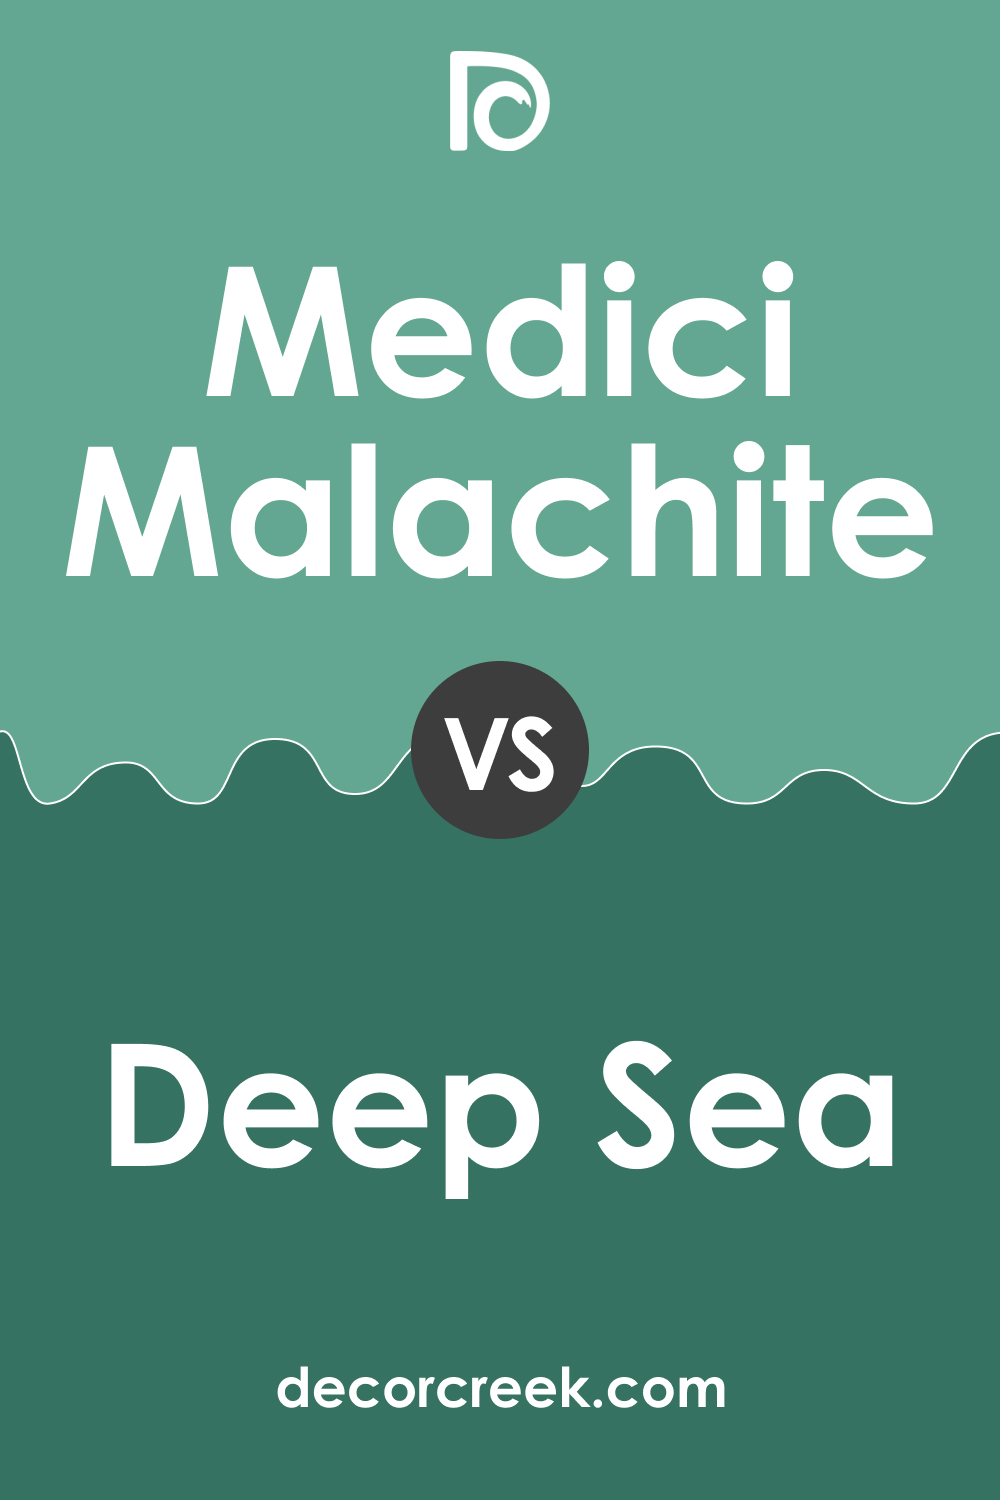 Medici Malachite 600 vs. BM 623 Deep Sea